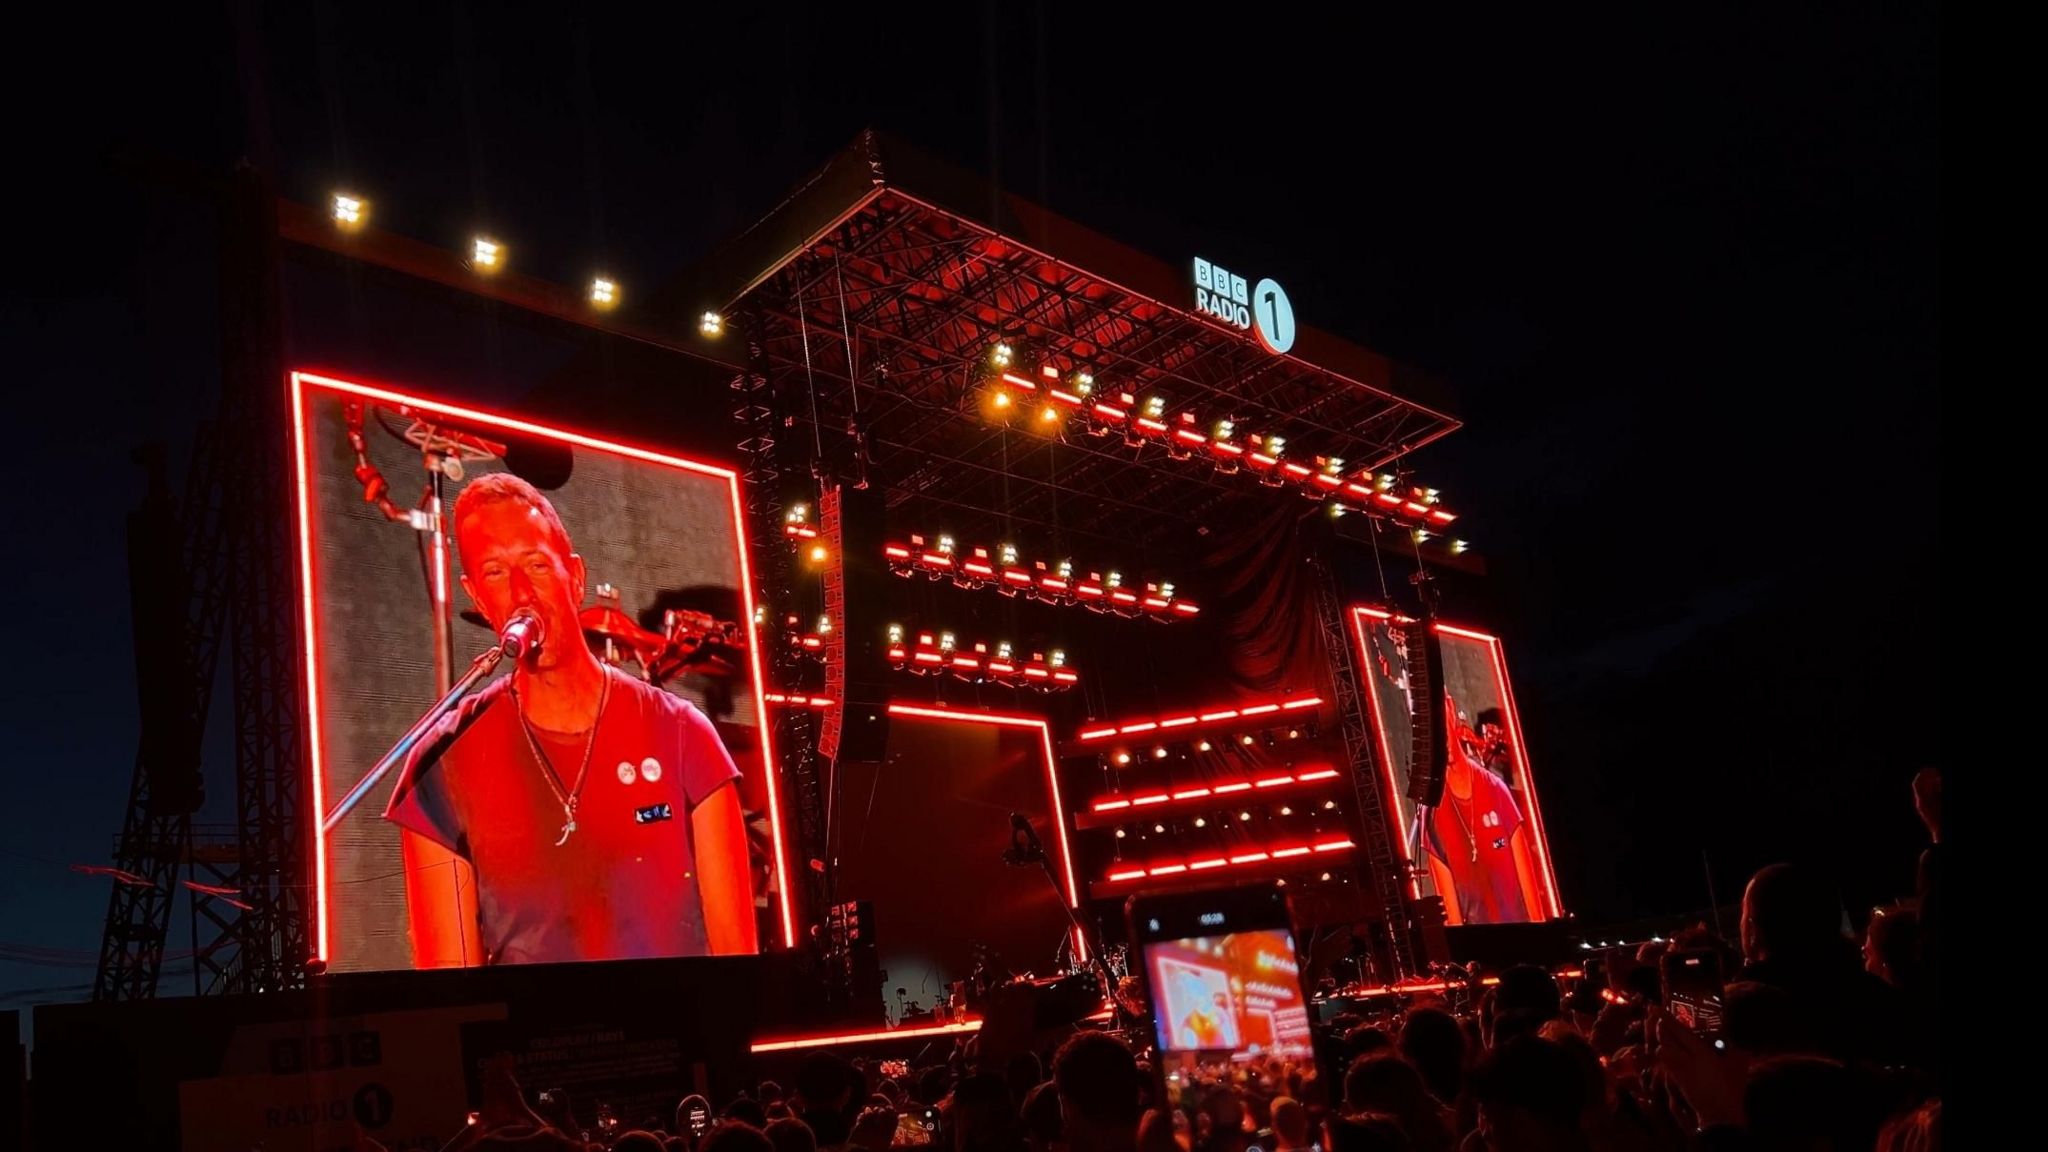 Coldplay on stage at Big Weekend with Orange lights